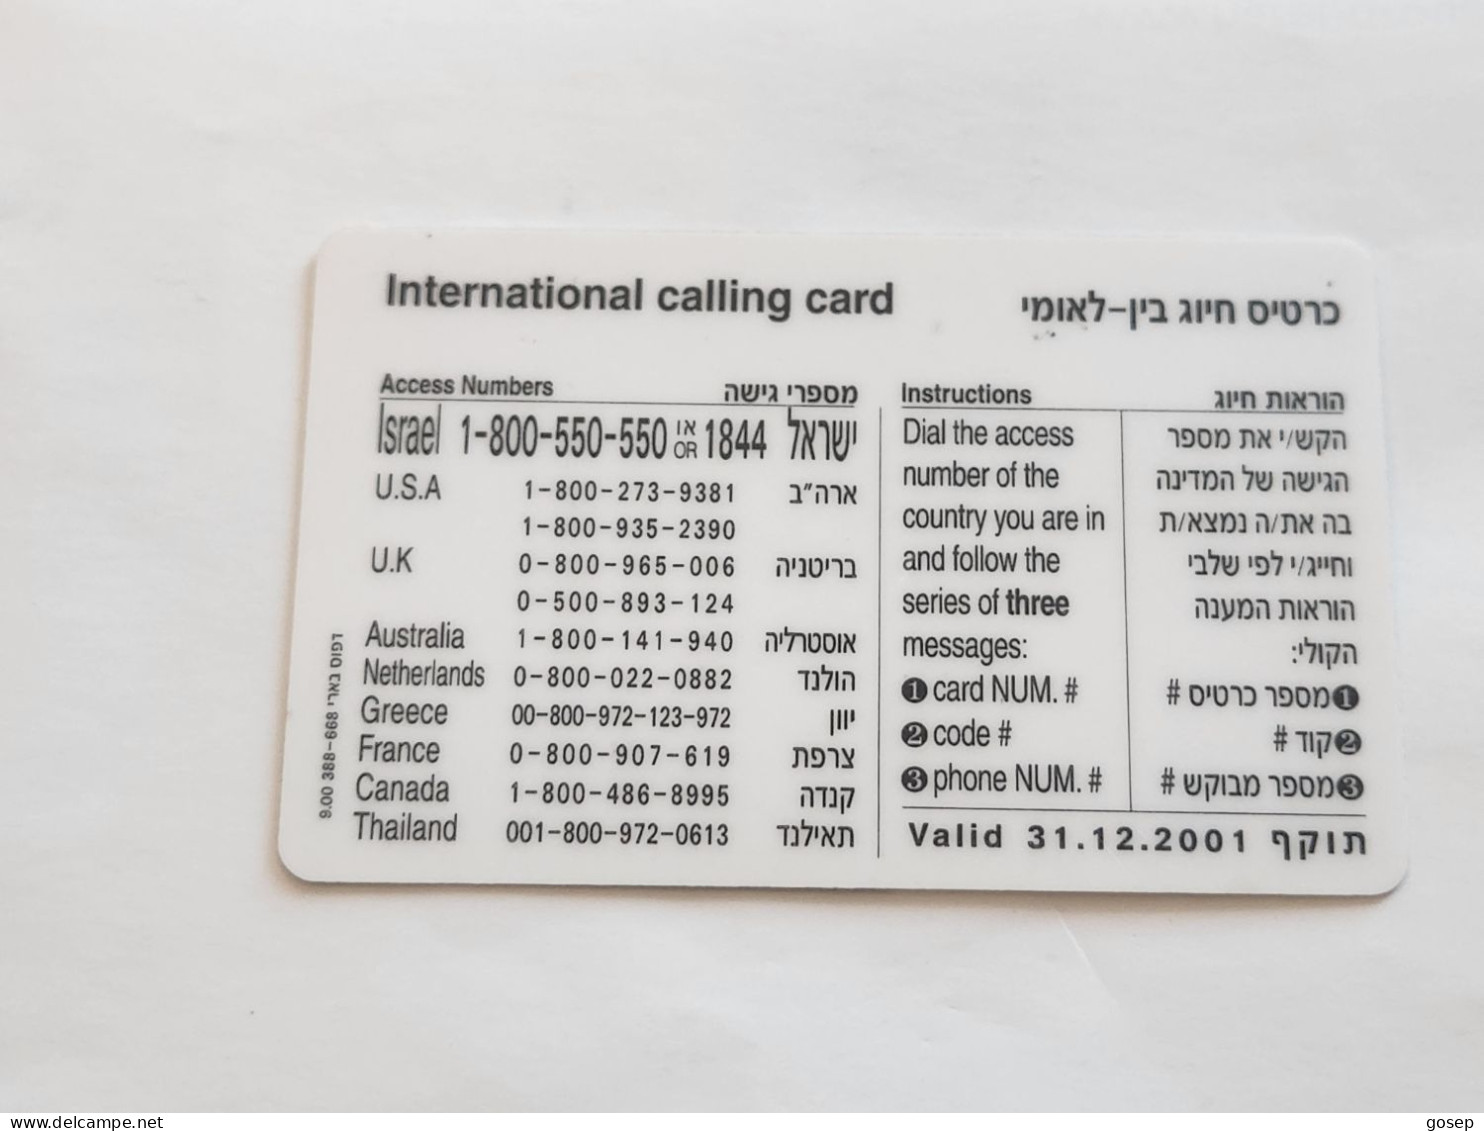 ISRAEL-(BEZ-INTER-737)-Gideon Aloni-Company-(39)(100uits)(21768999-6599)(plastic Card)Expansive Card - Israel